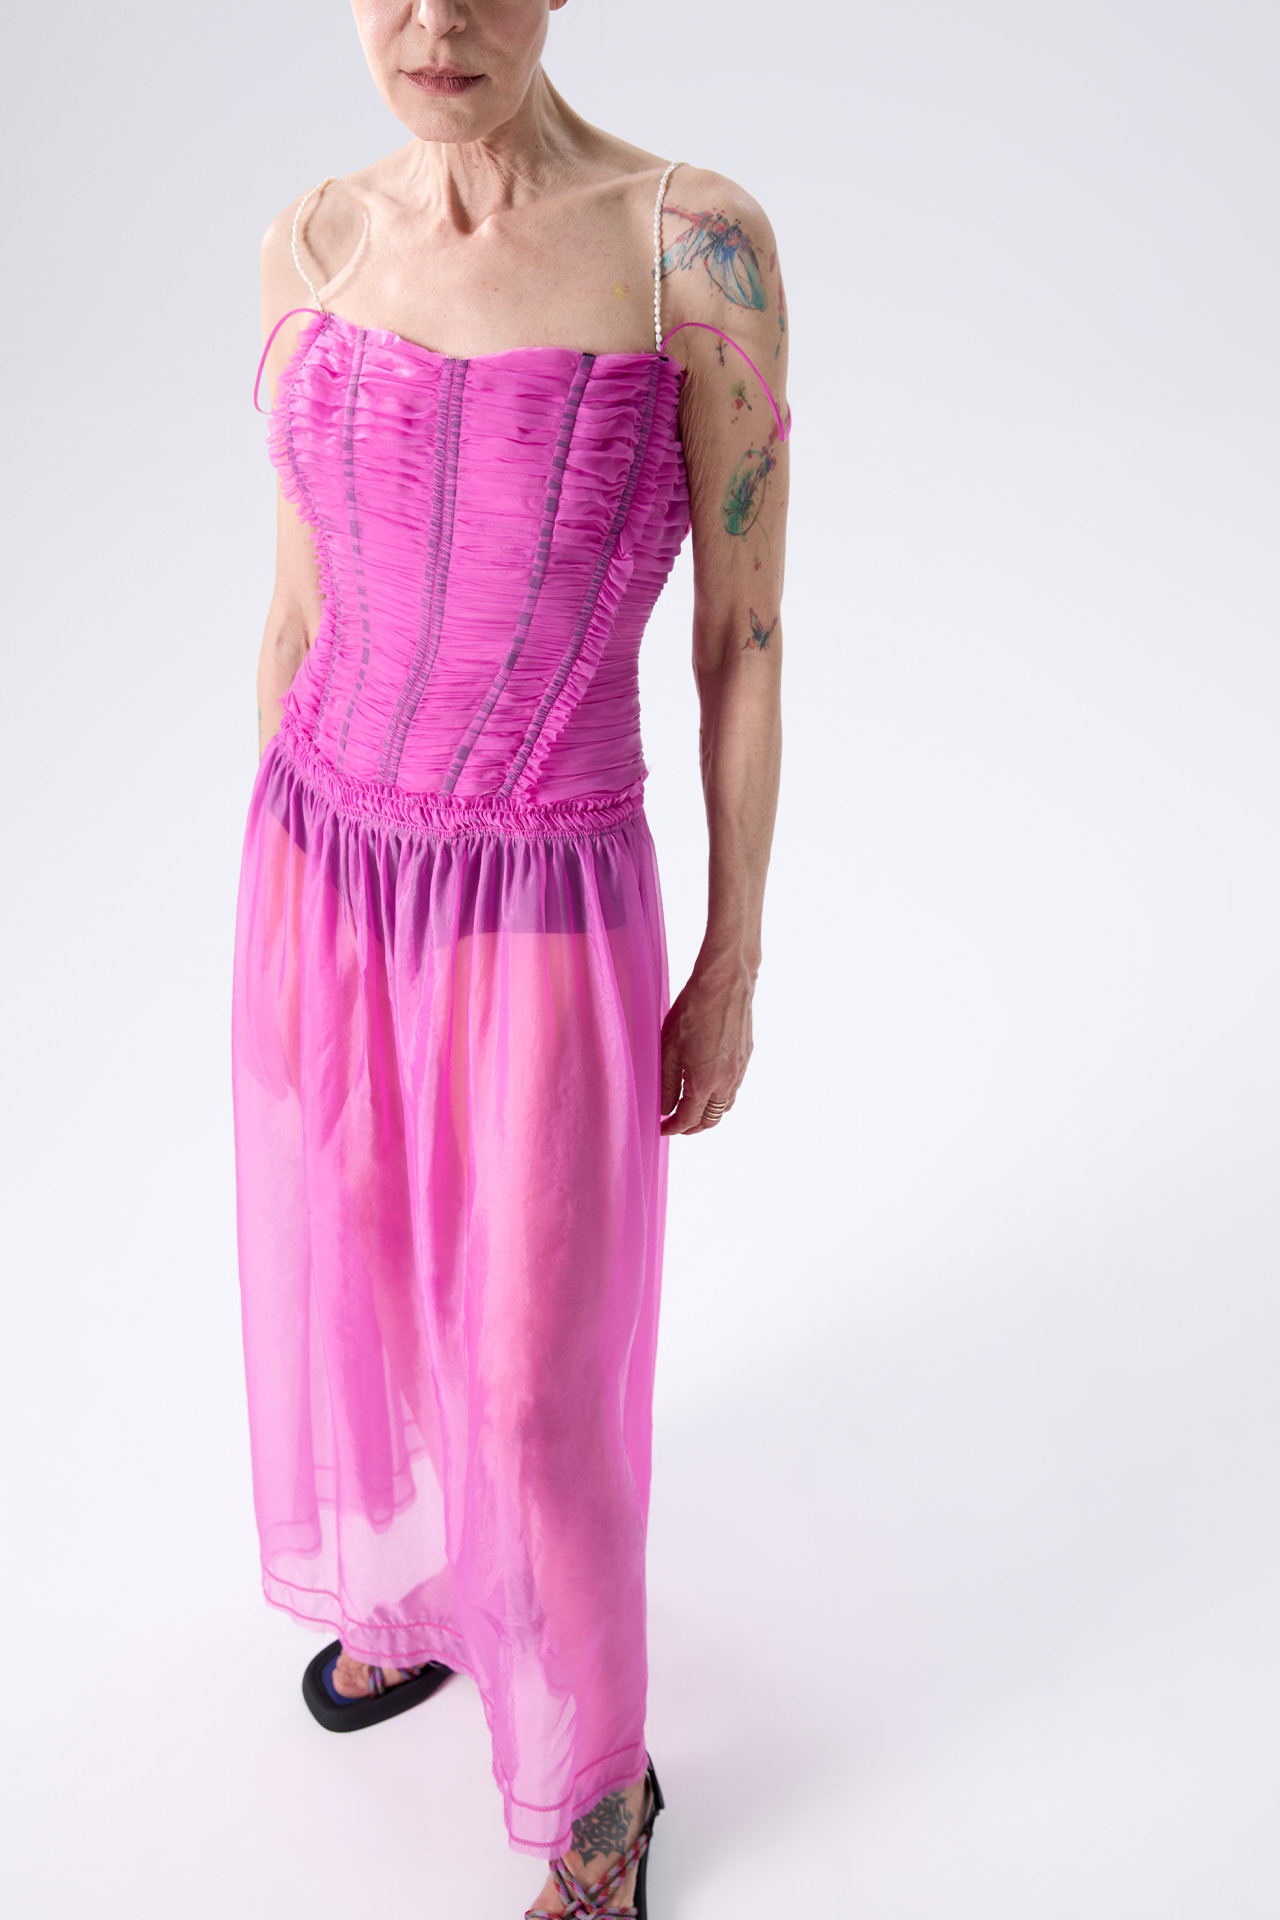 Franca Pink Dress | Miista Europe | Made in Spain